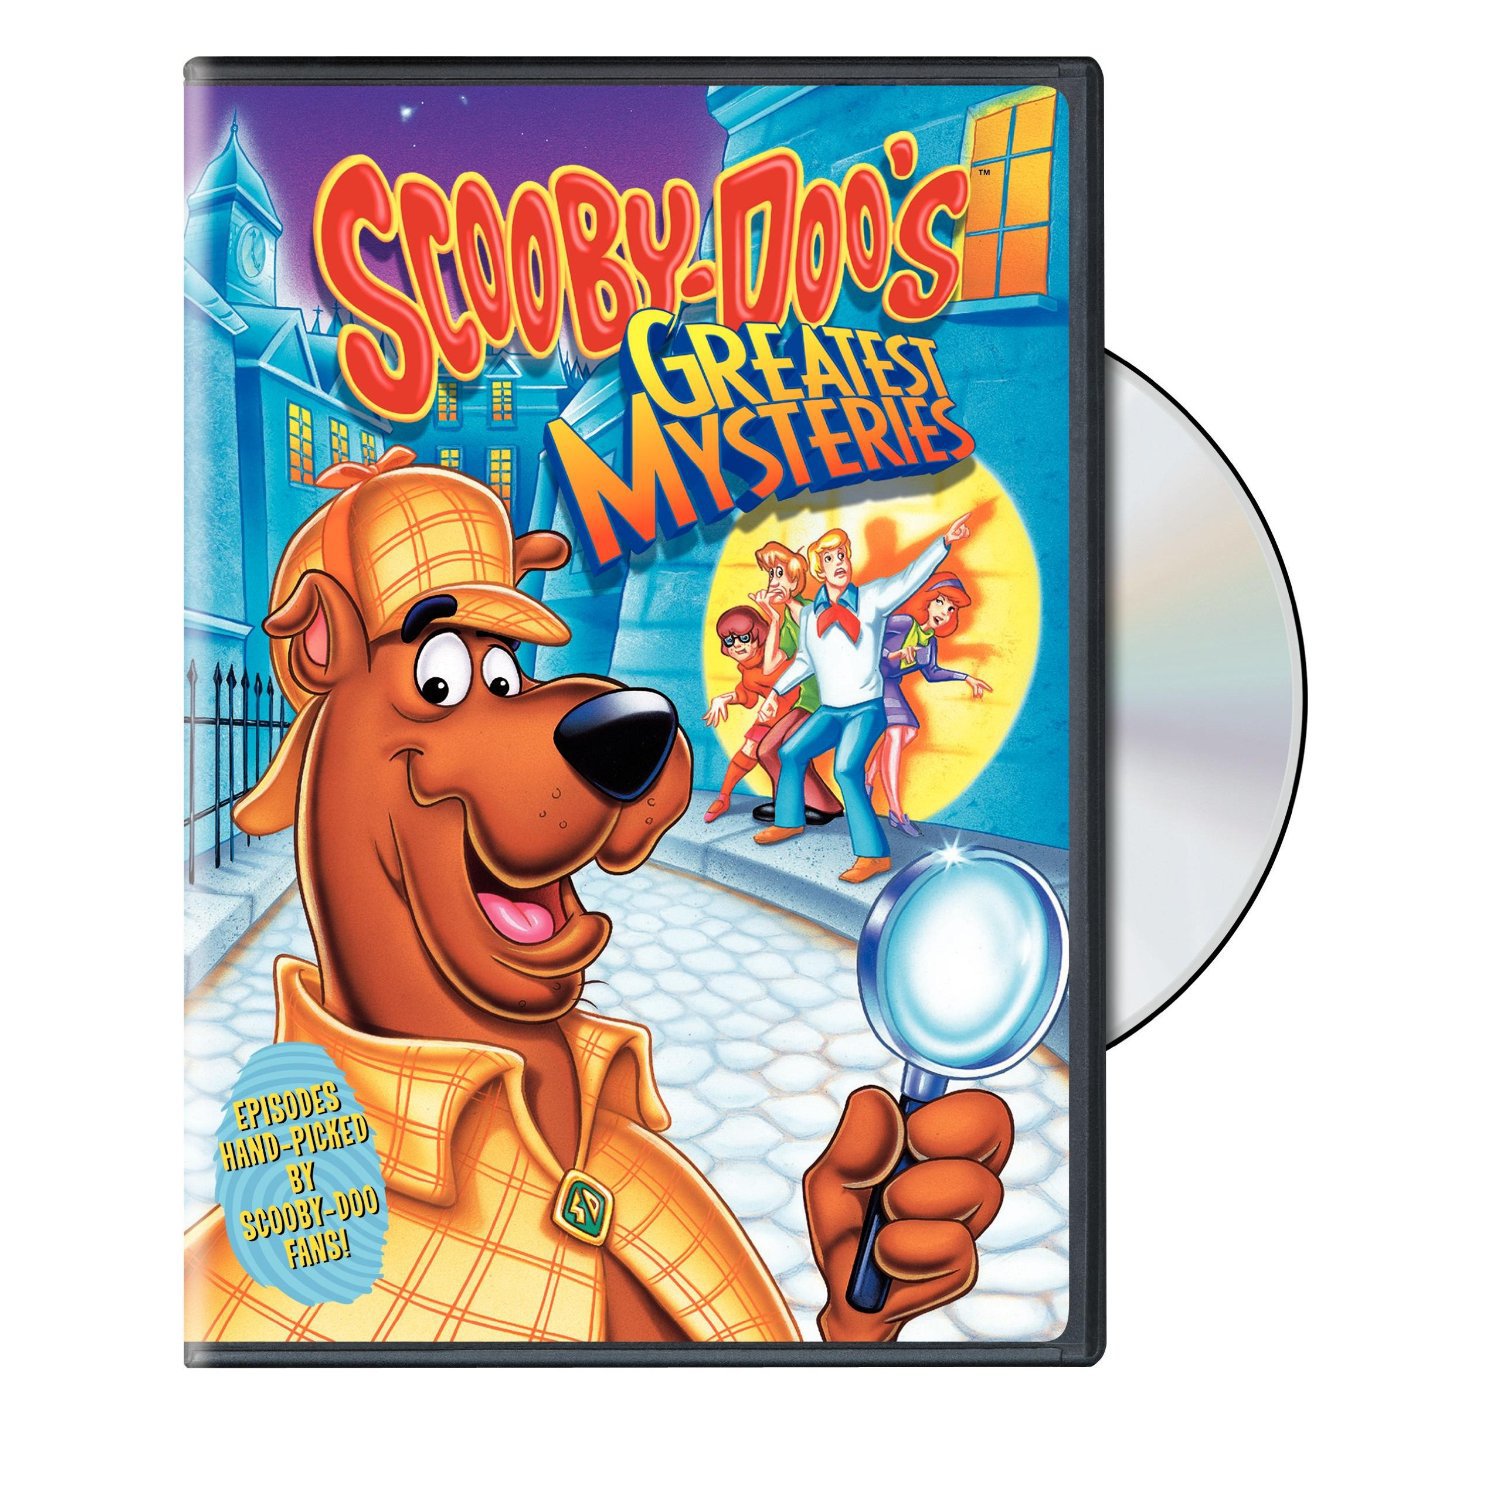 Scooby-Doo Greatest Mysteries